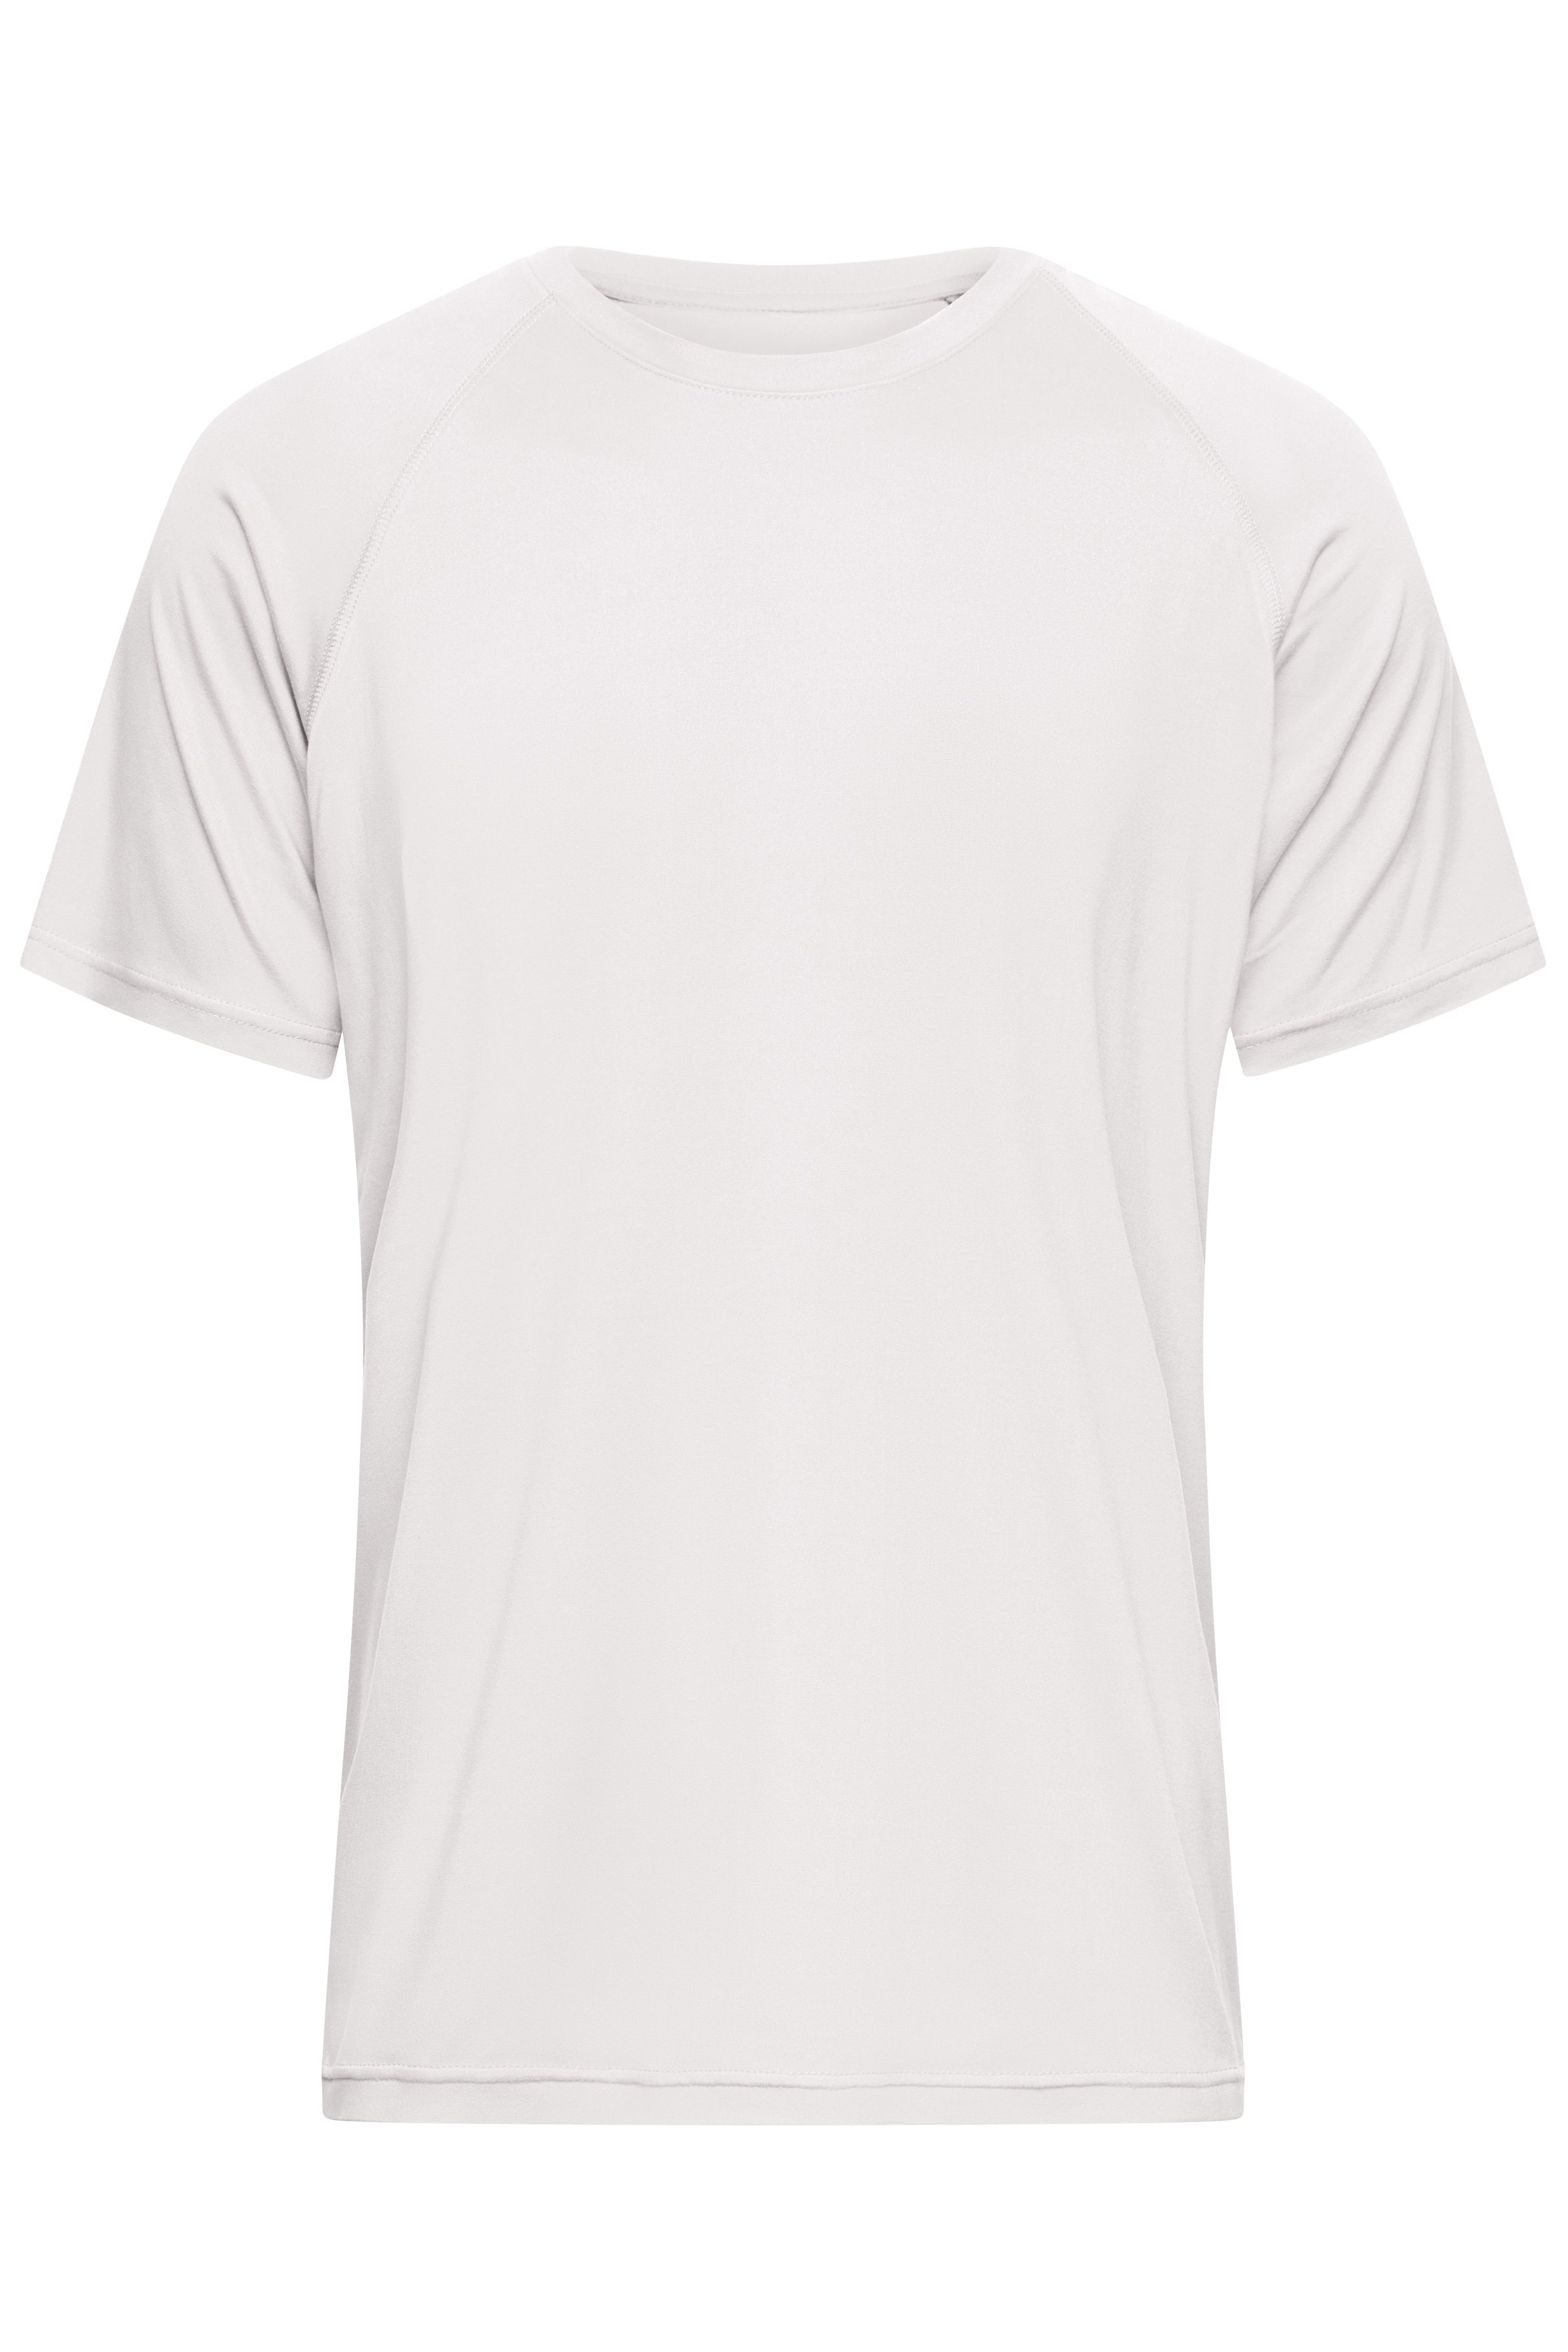 Men's Sports-T JN520 Funktions-Shirt aus recyceltem Polyester für Sport und Fitness